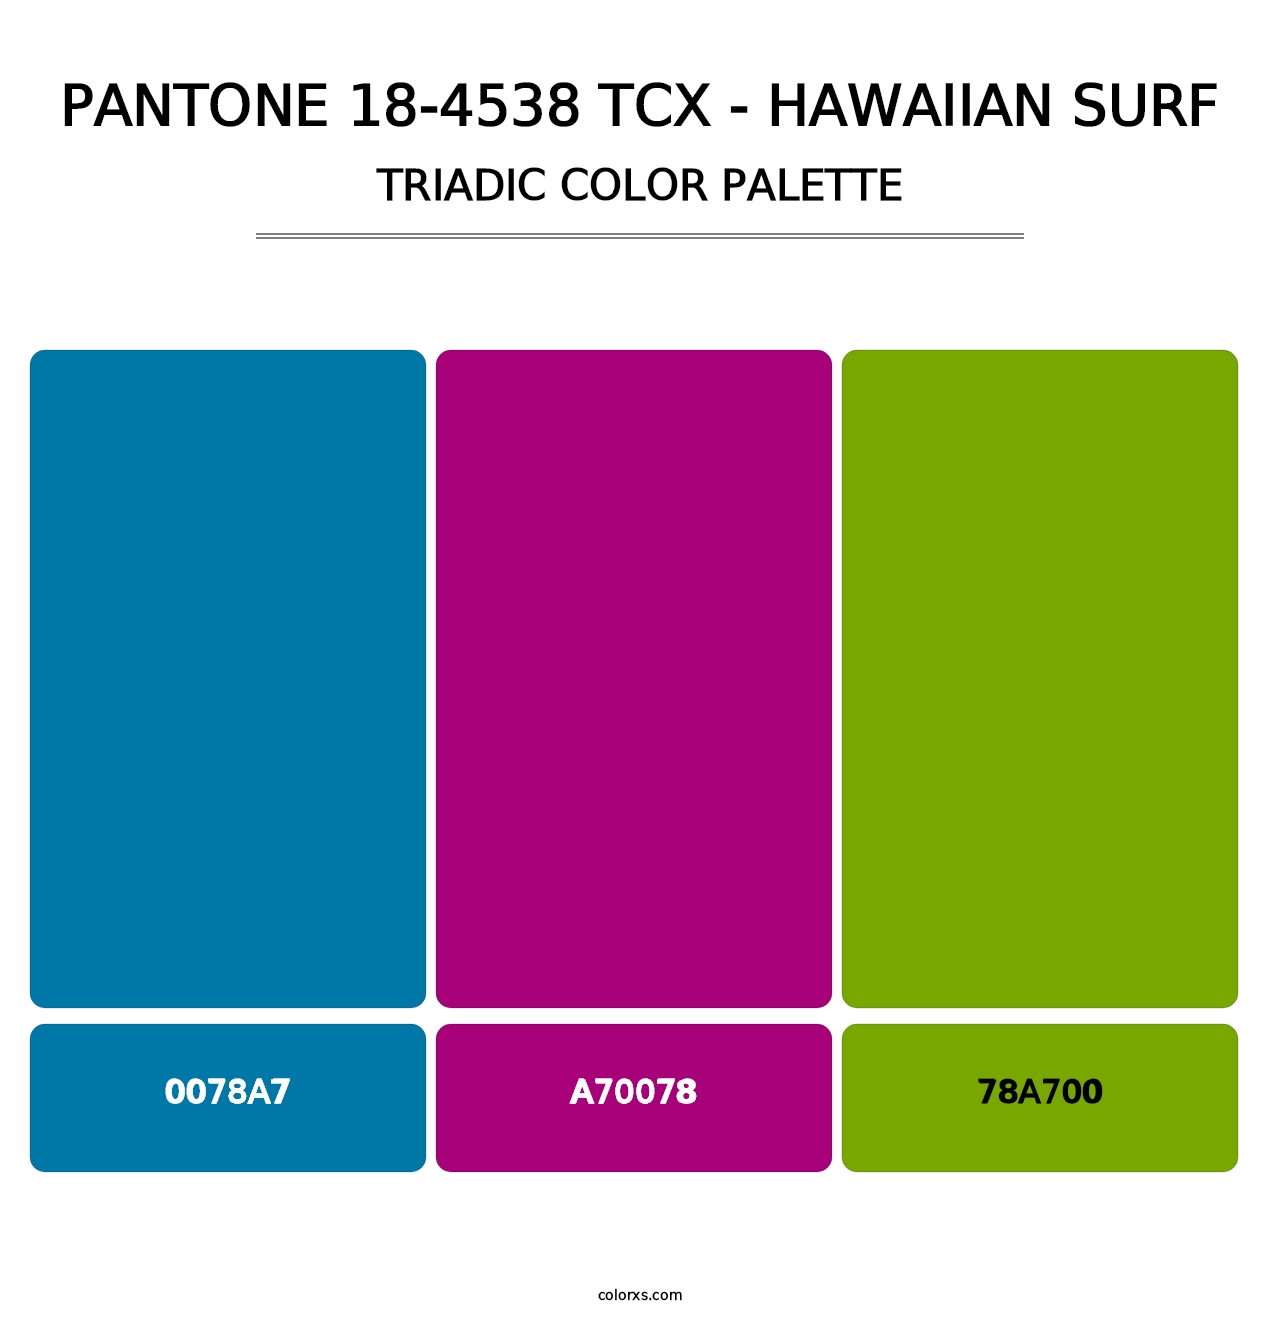 PANTONE 18-4538 TCX - Hawaiian Surf - Triadic Color Palette